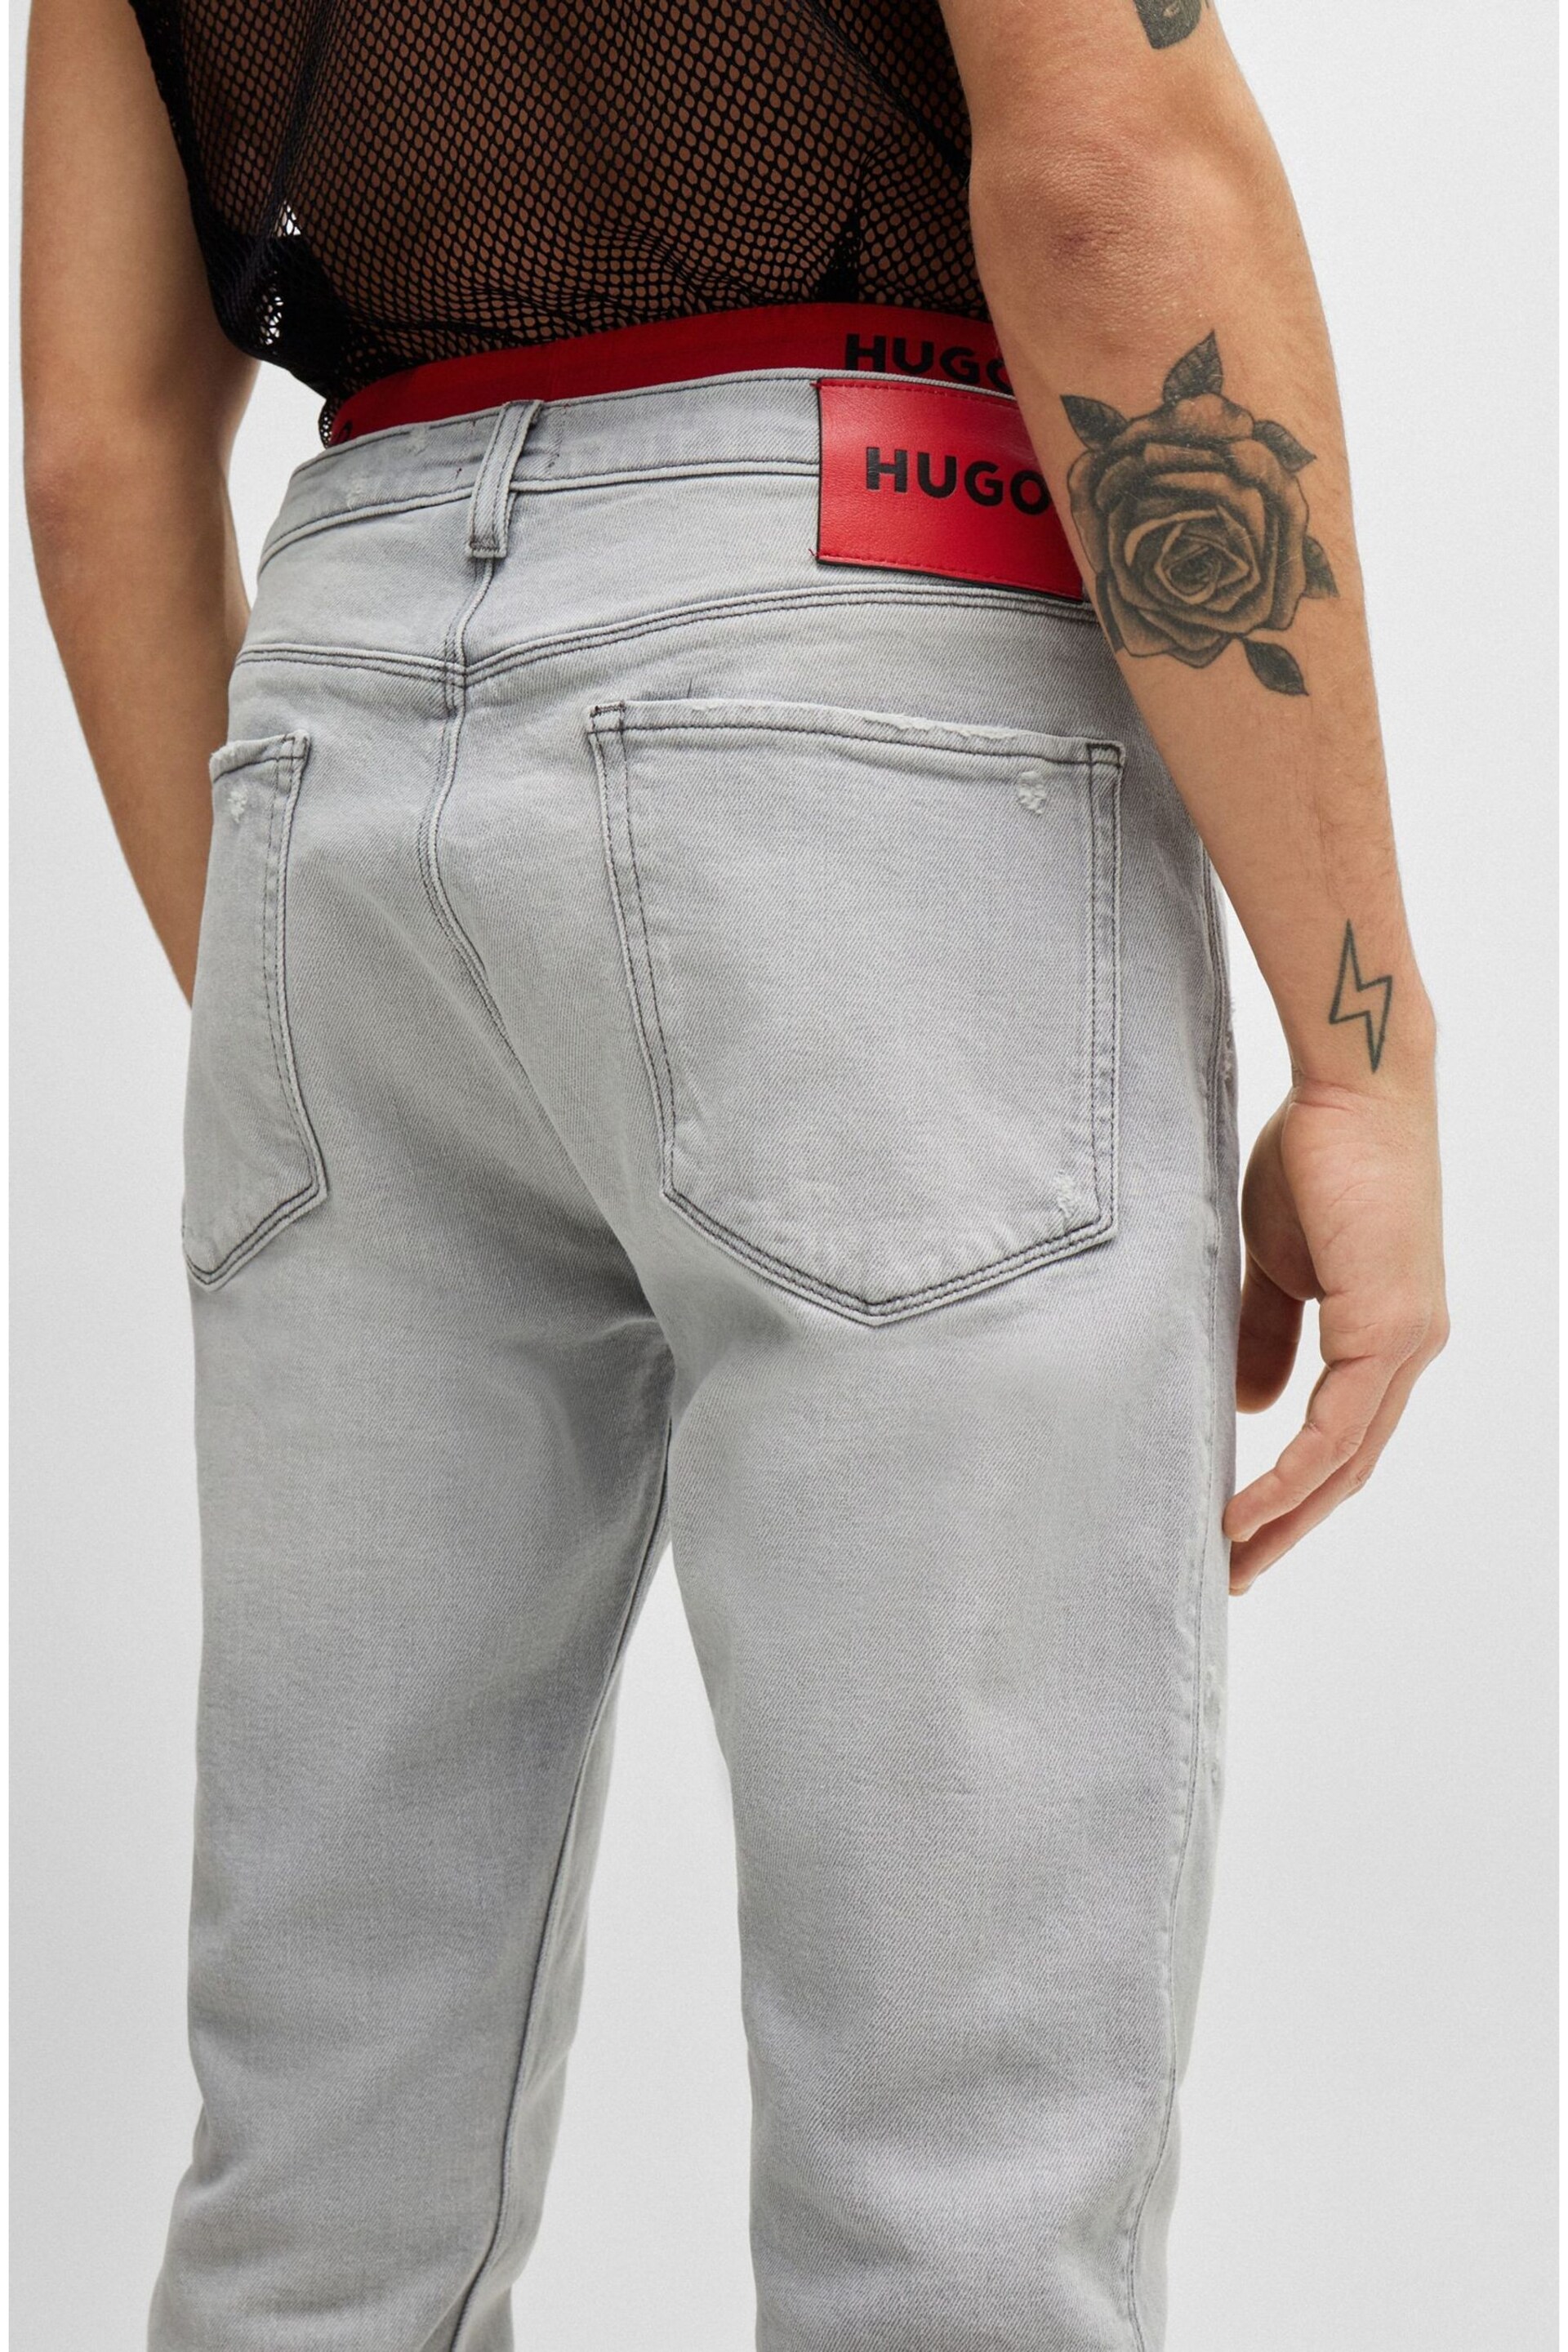 HUGO Grey Slim-Fit Jeans in Light-Grey Denim - Image 3 of 5